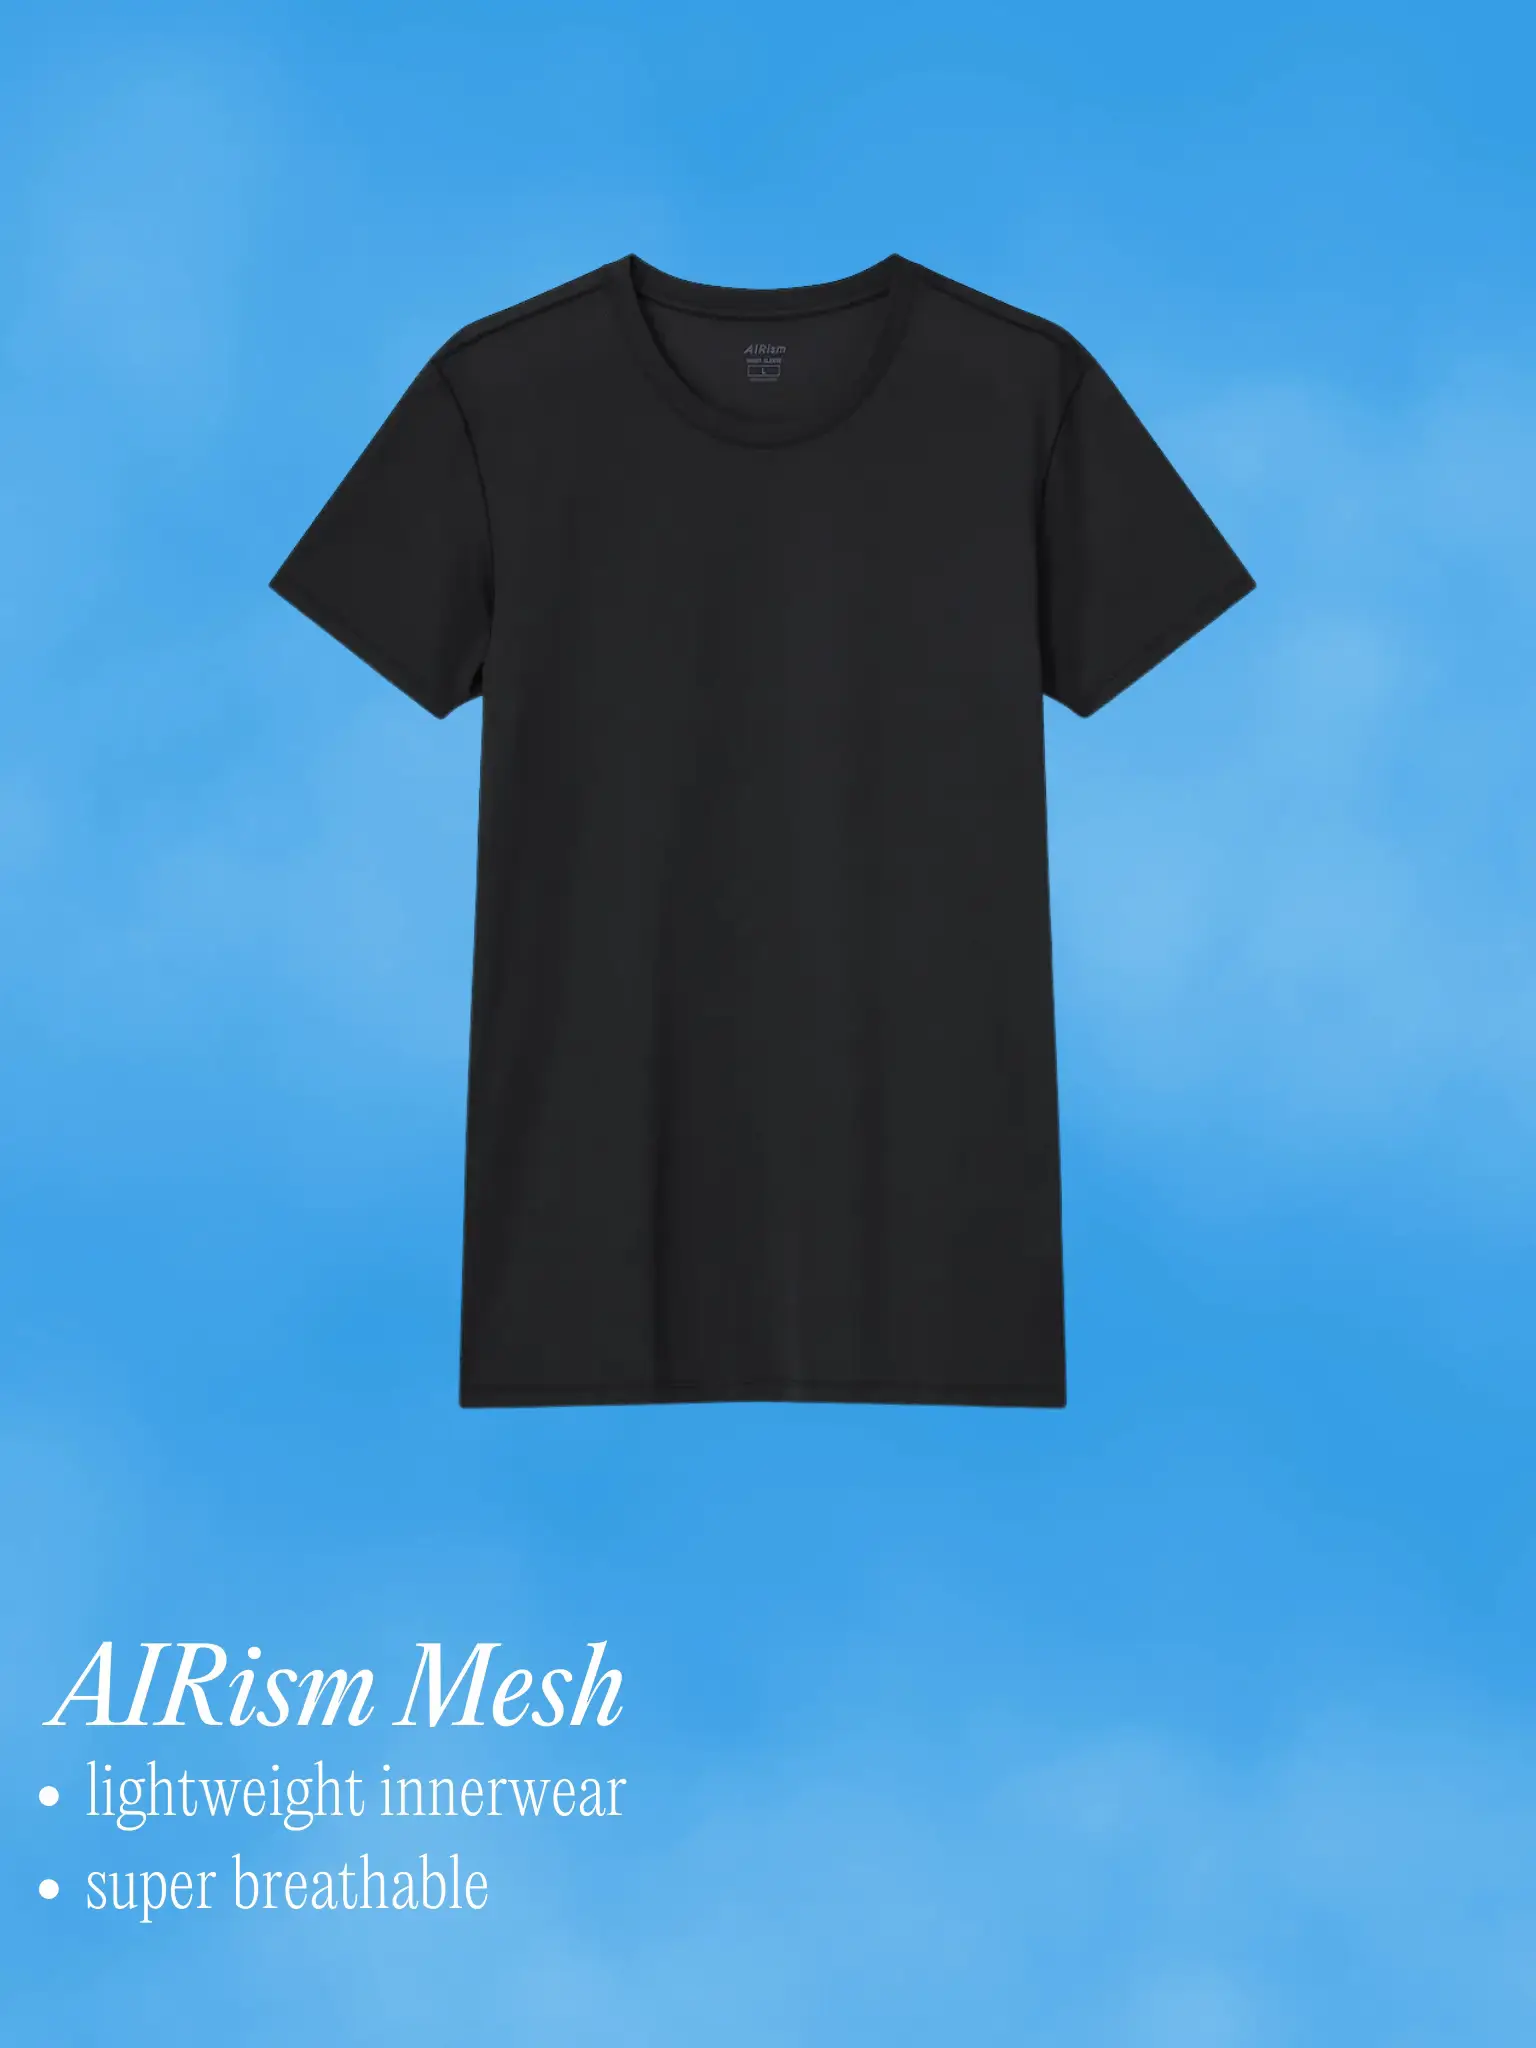 Uniqlo Airism Mesh Undershirt Review - The Undershirt Guy